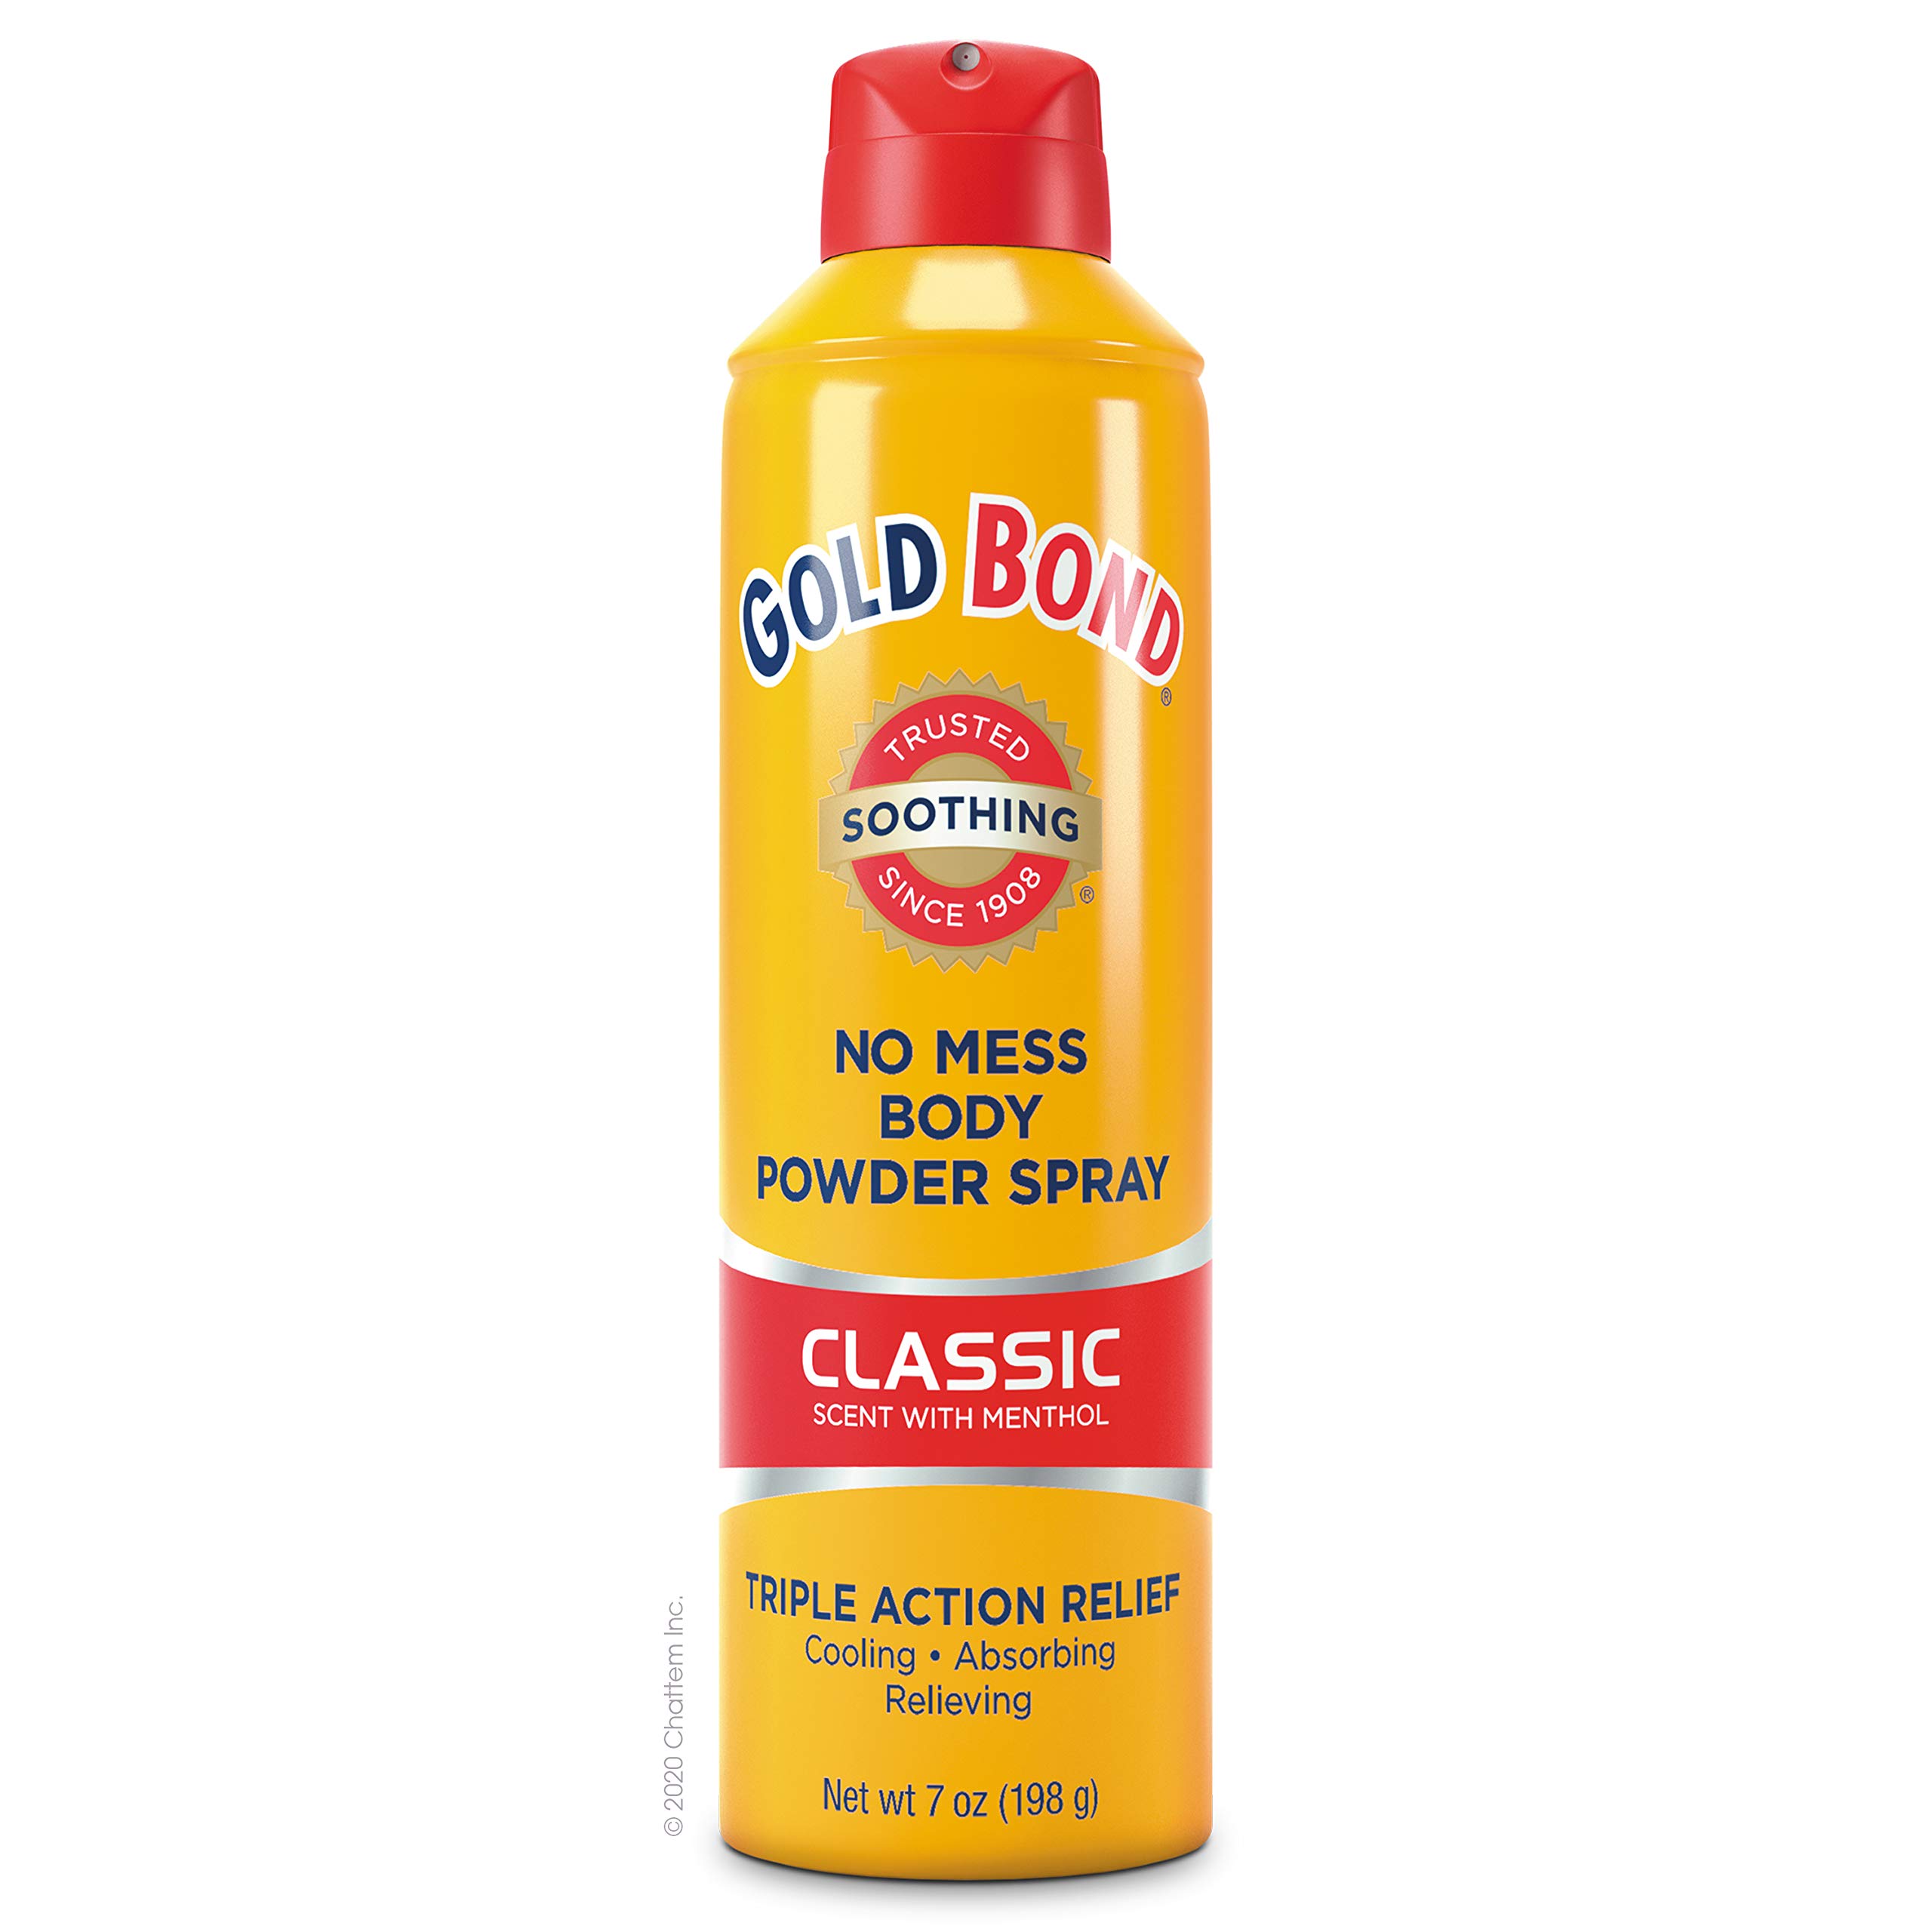 Gold Bond No Mess Body Powder Spray, 7 oz., Classic Scent